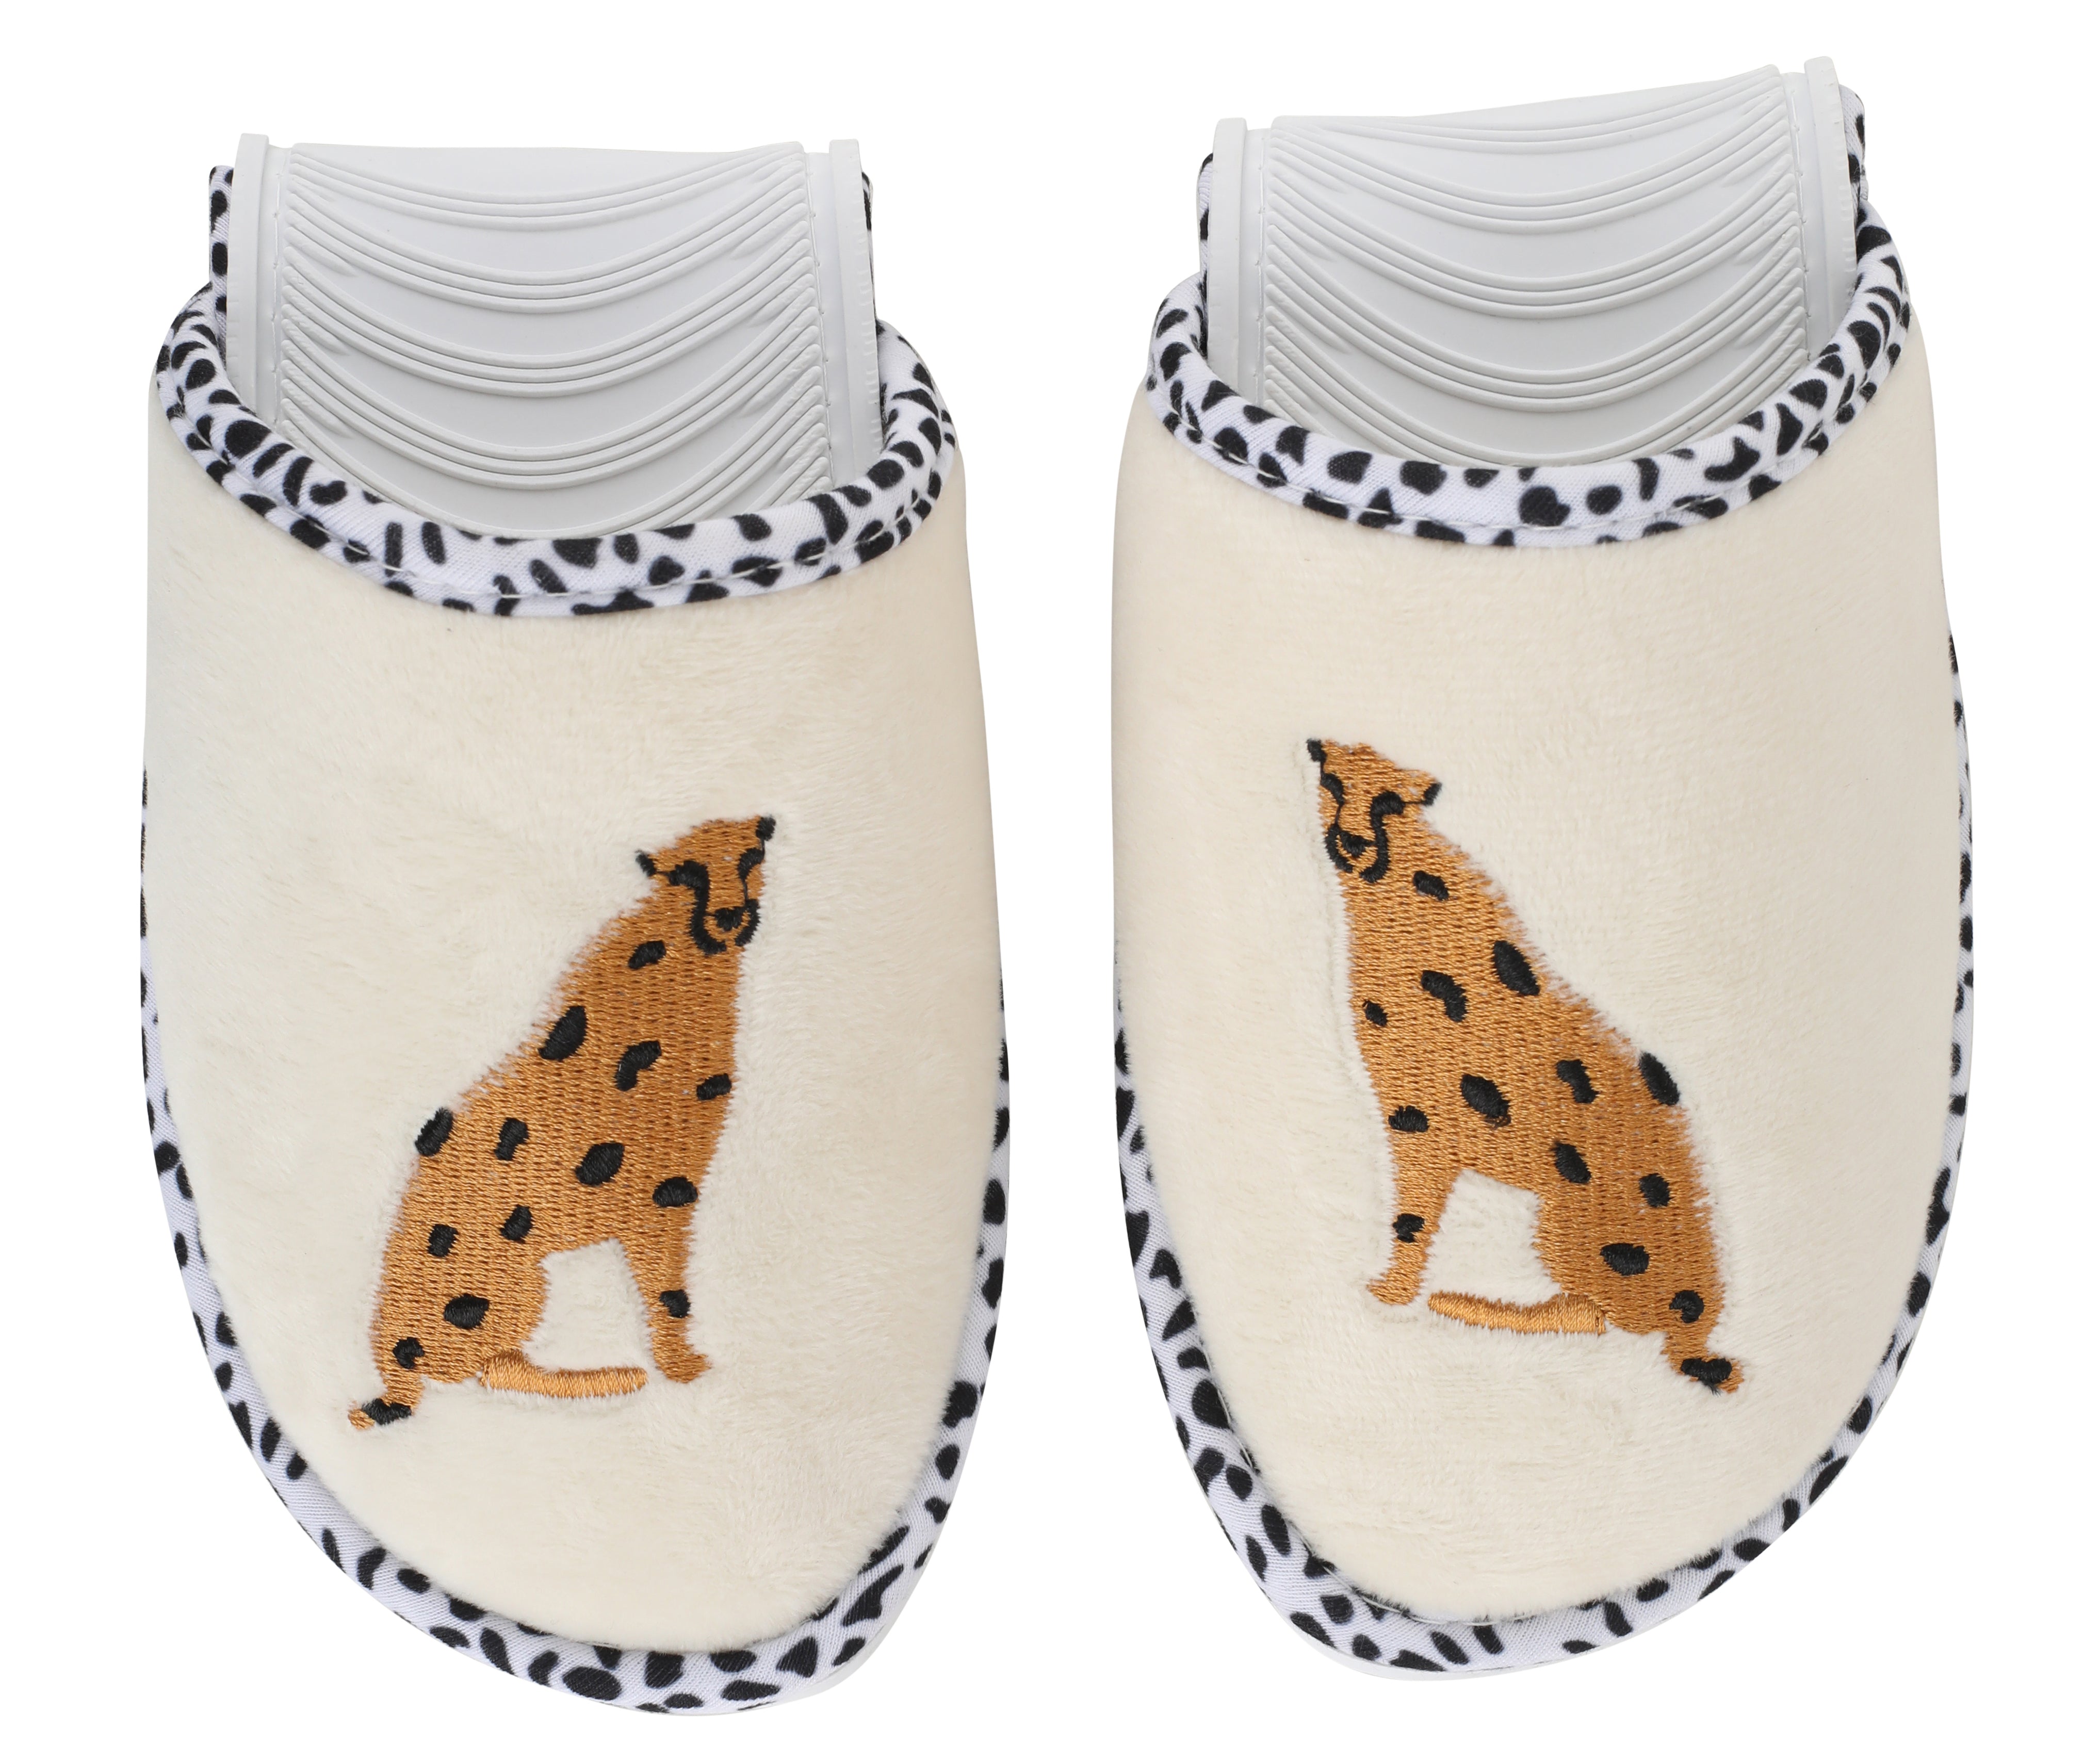 Foldable Travel Slippers Cheetah